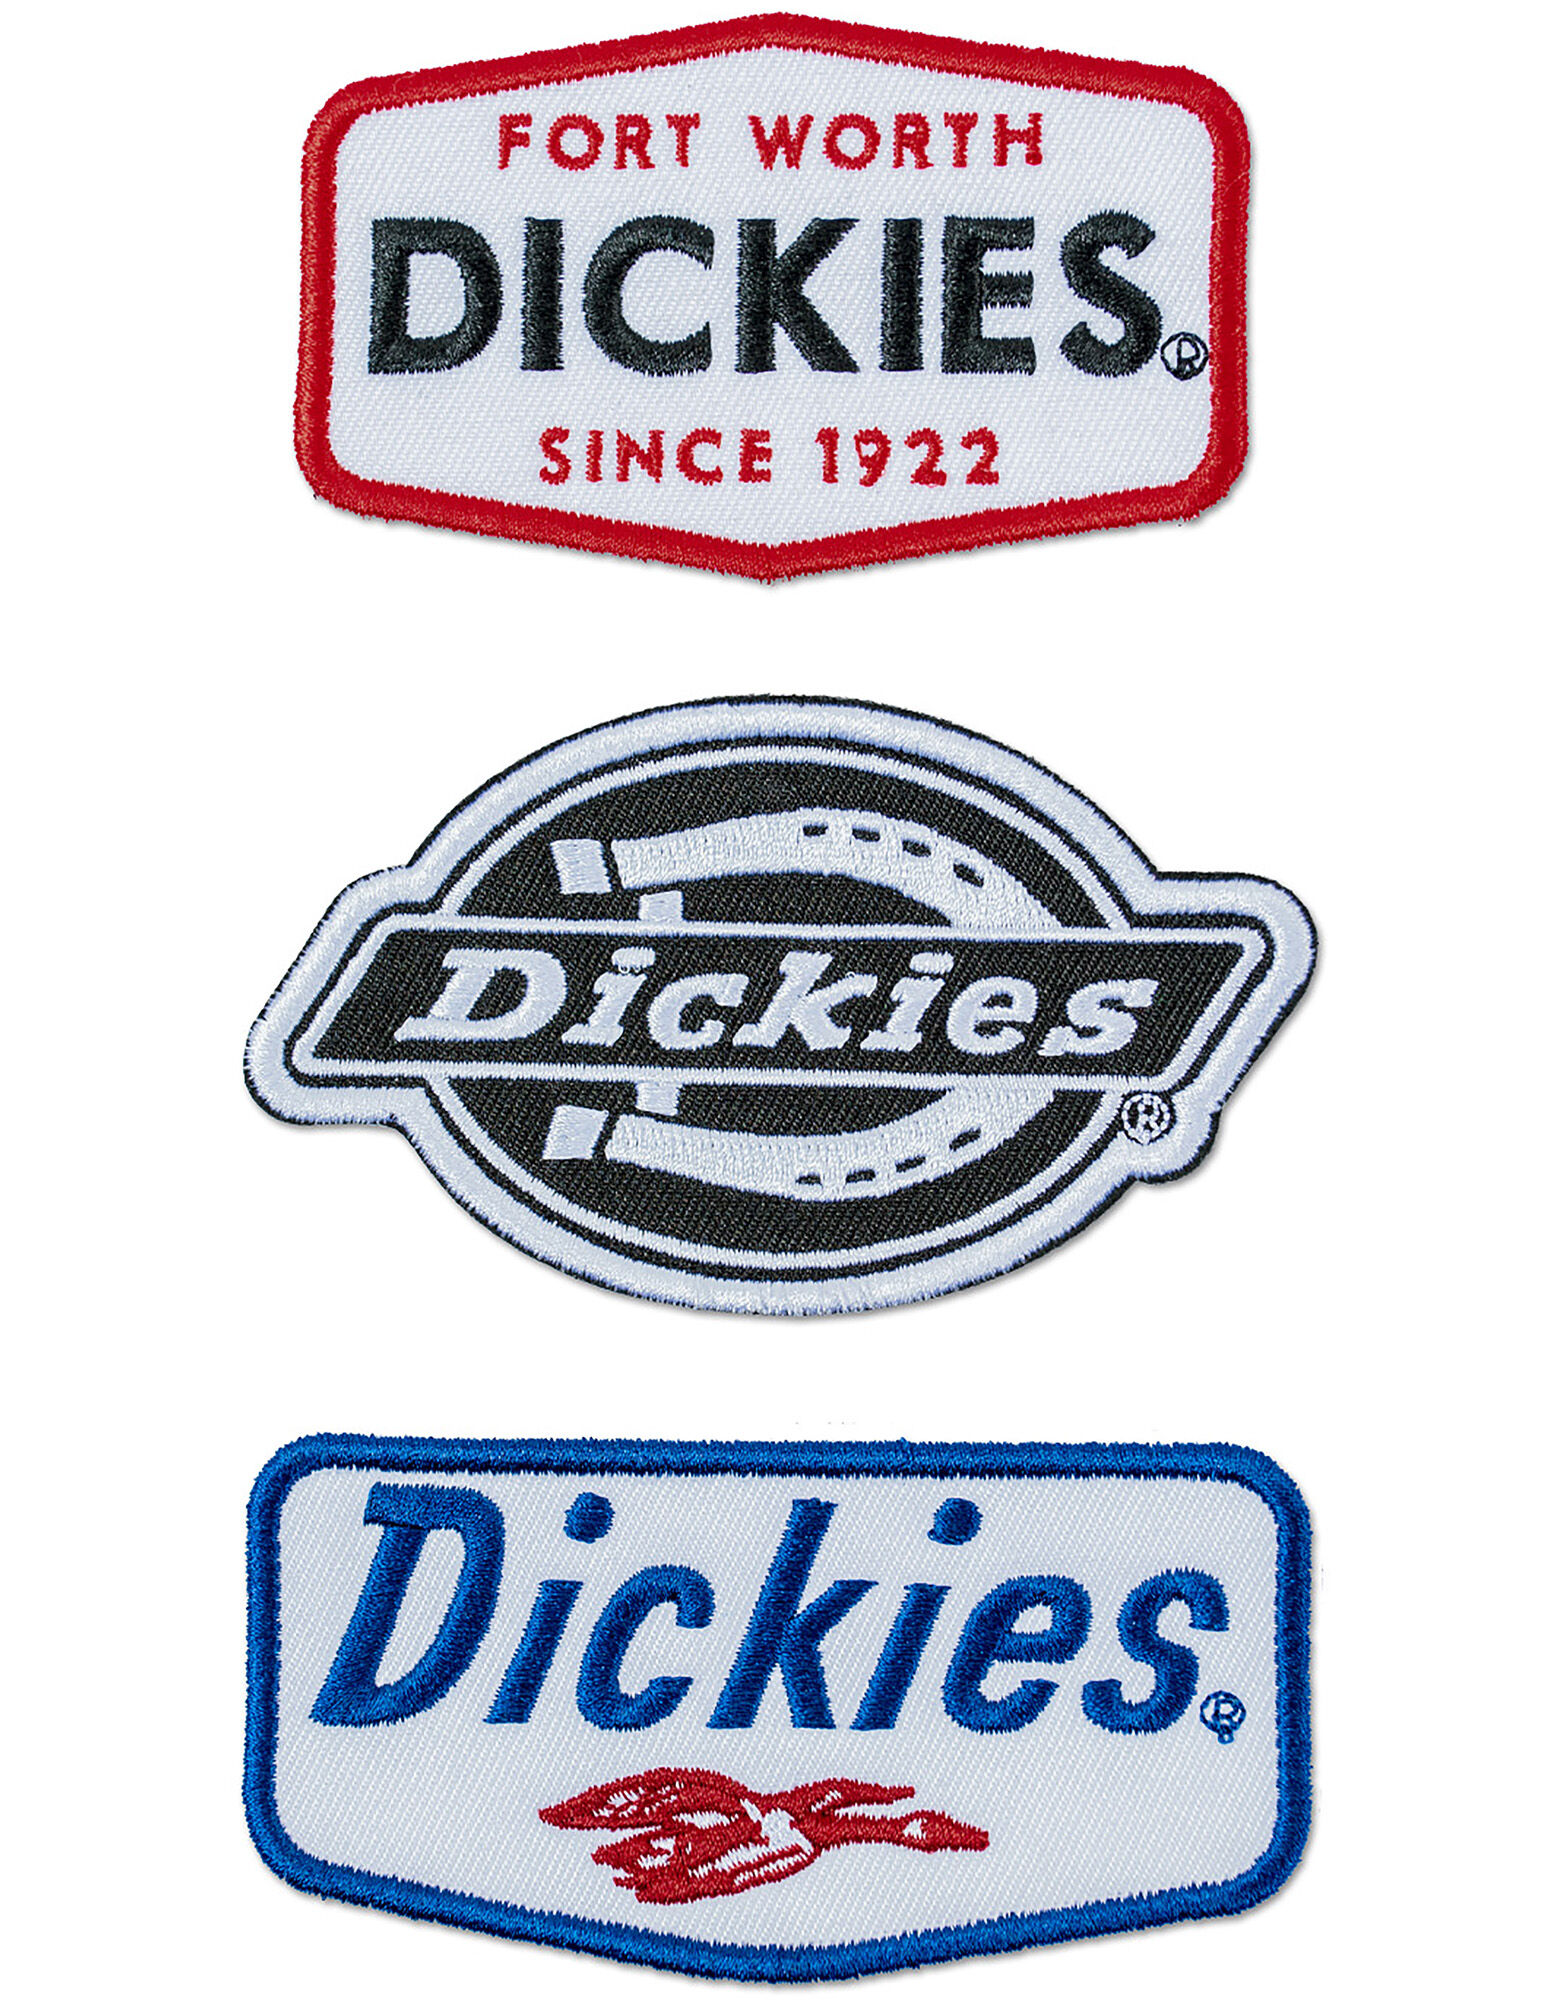 The Dickies Wallpapers